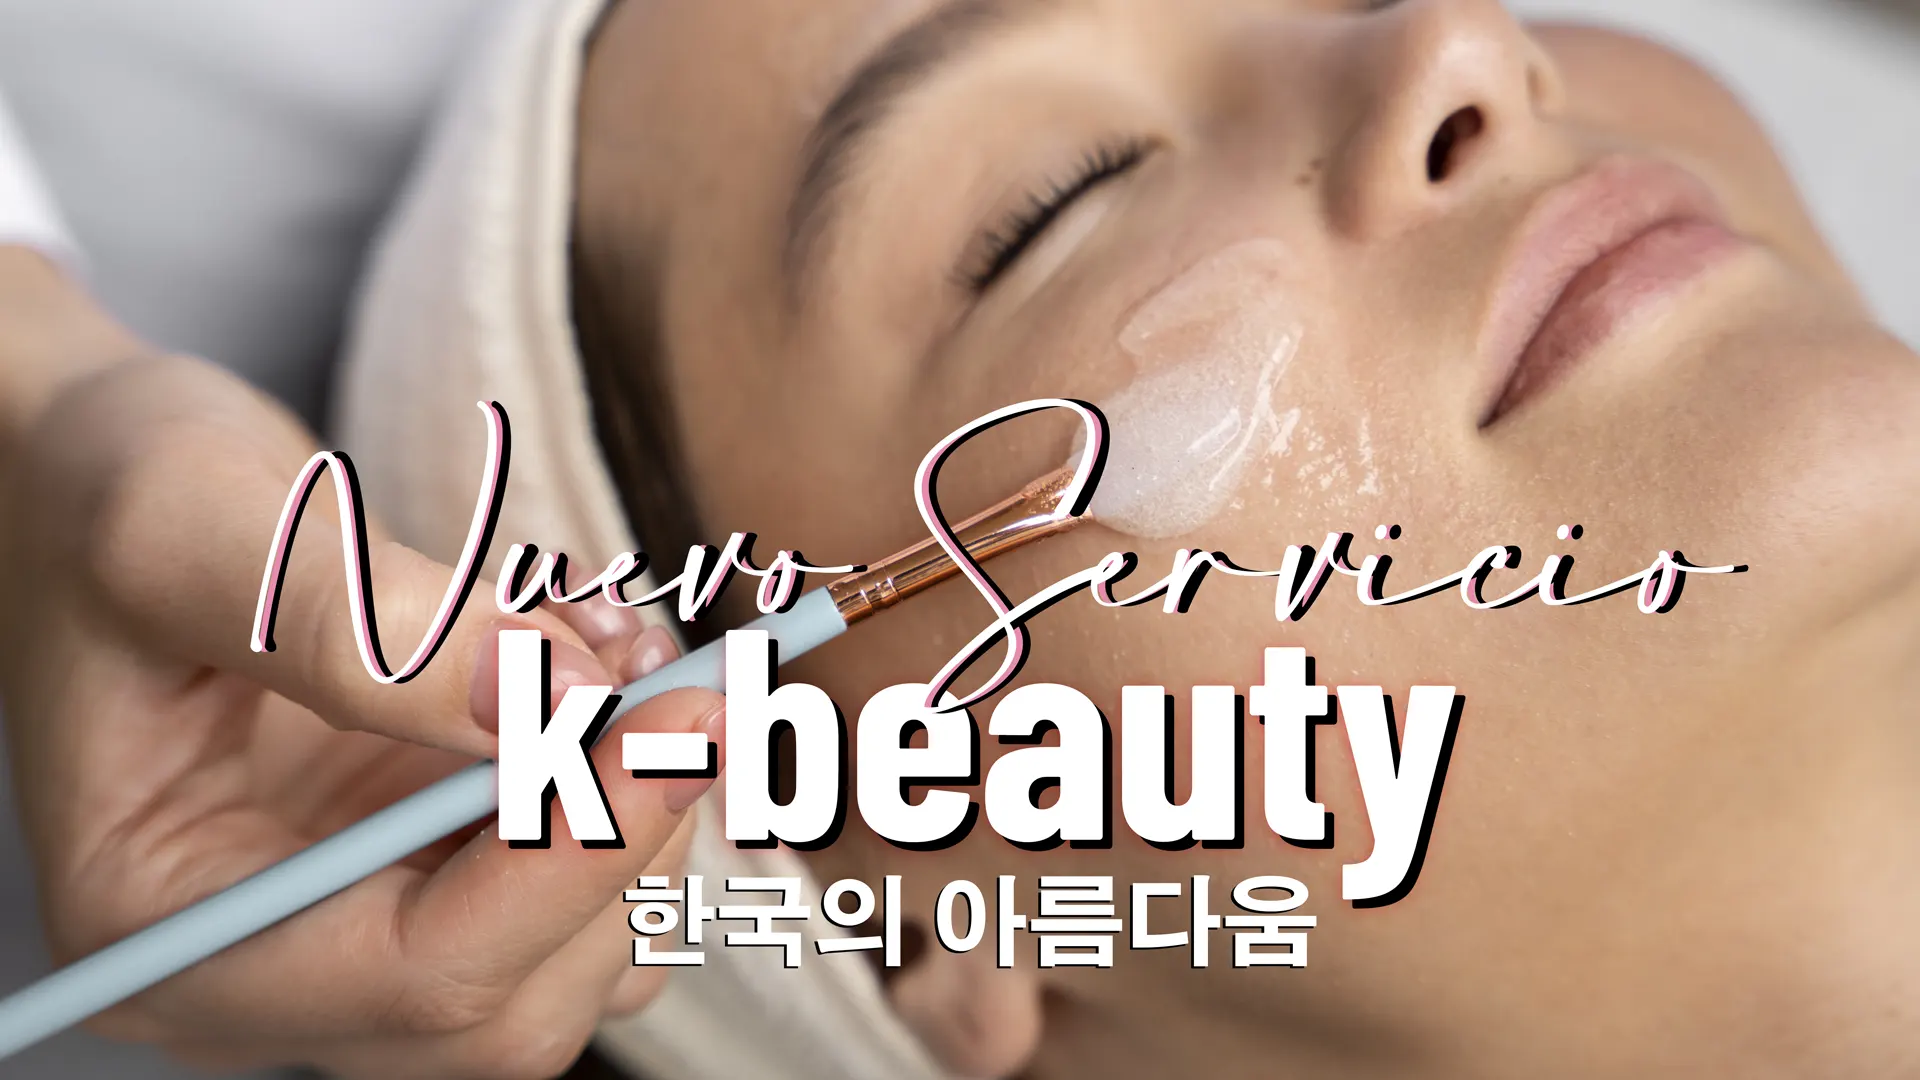 K beauty tratamiento limpieza facial